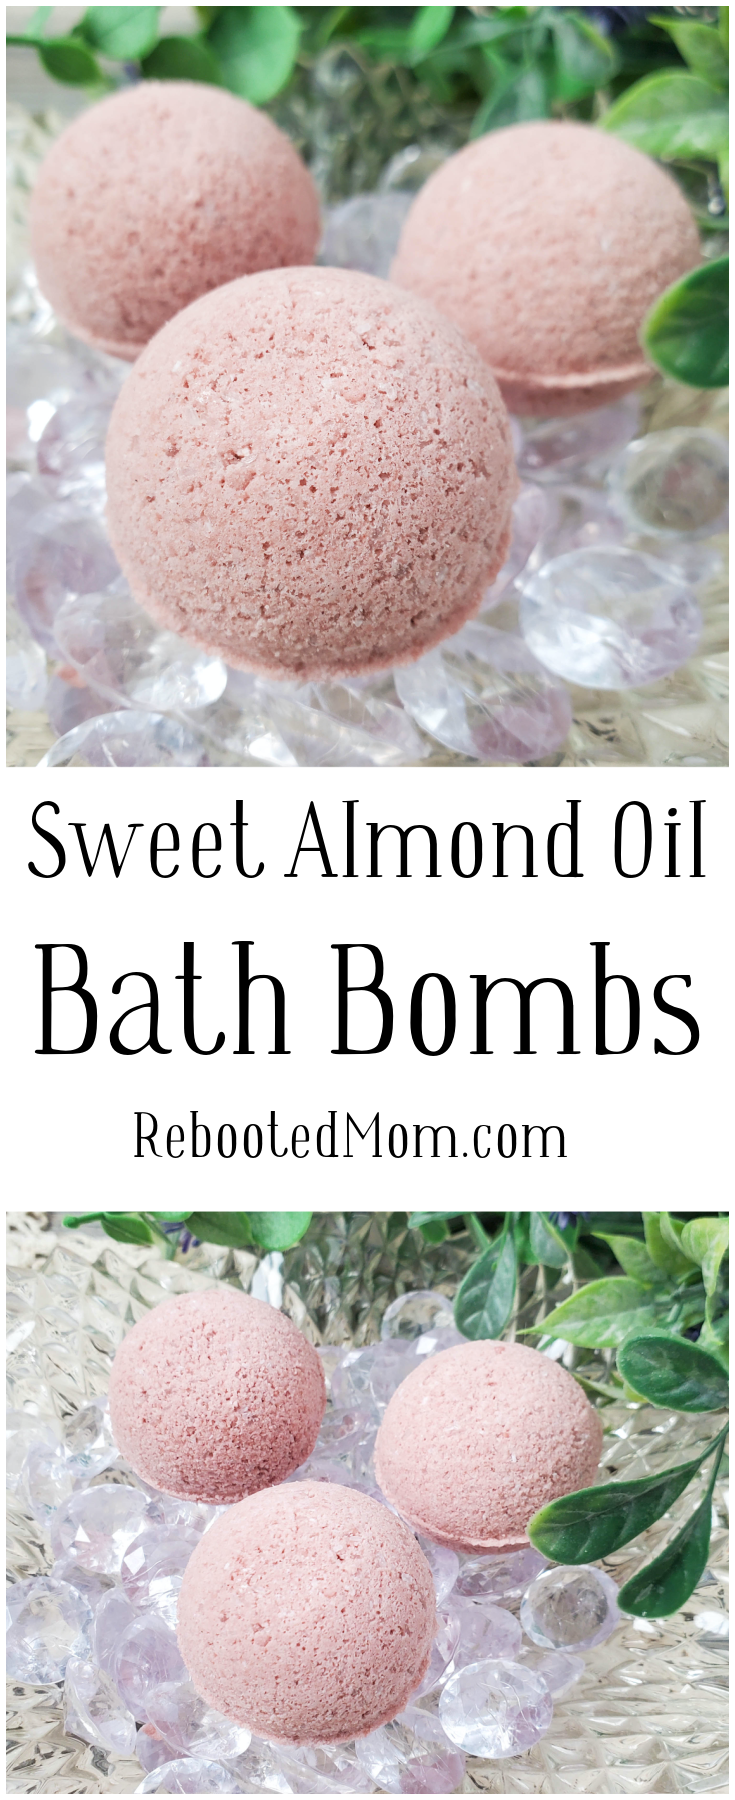 Sweet Almond Oil Bath Bombs